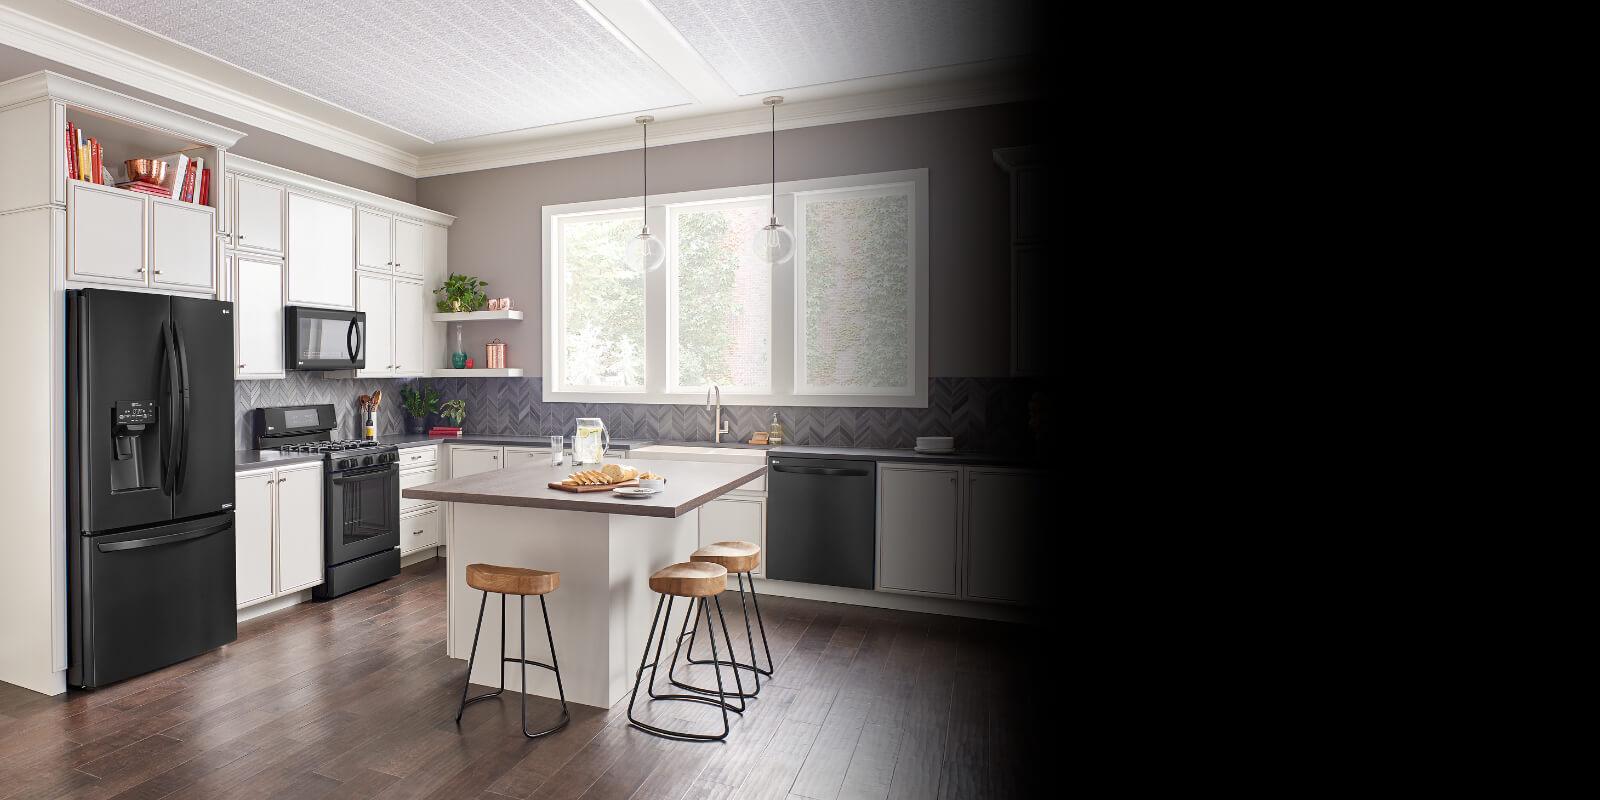 LG Appliances Compare Kitchen Home Appliances LG USA